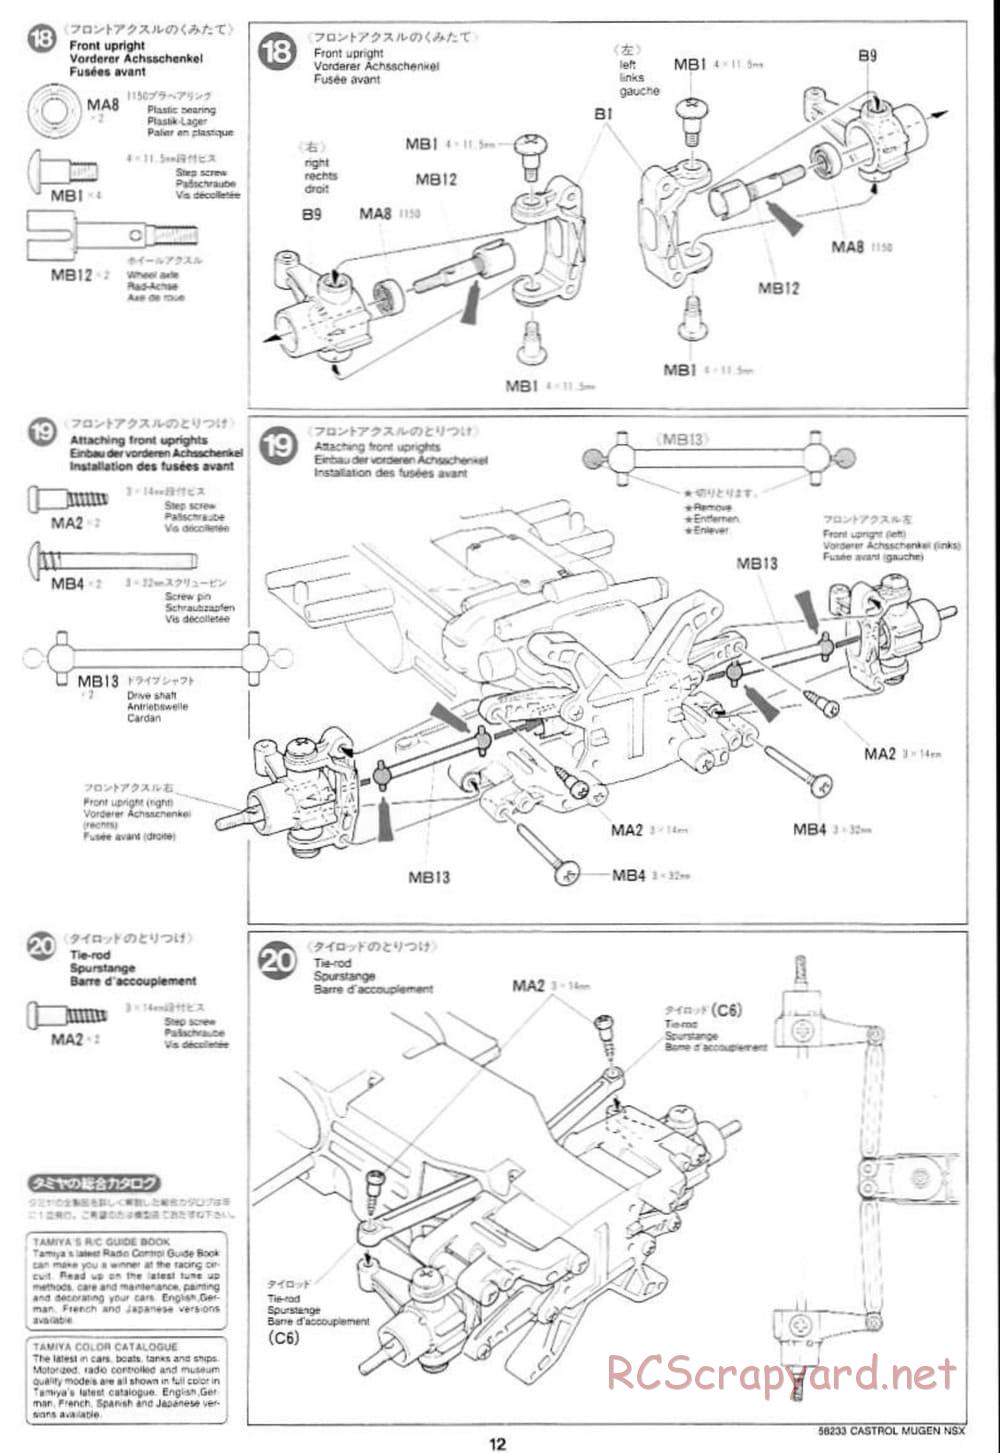 Tamiya - Castrol Mugen NSX - TL-01 Chassis - Manual - Page 12